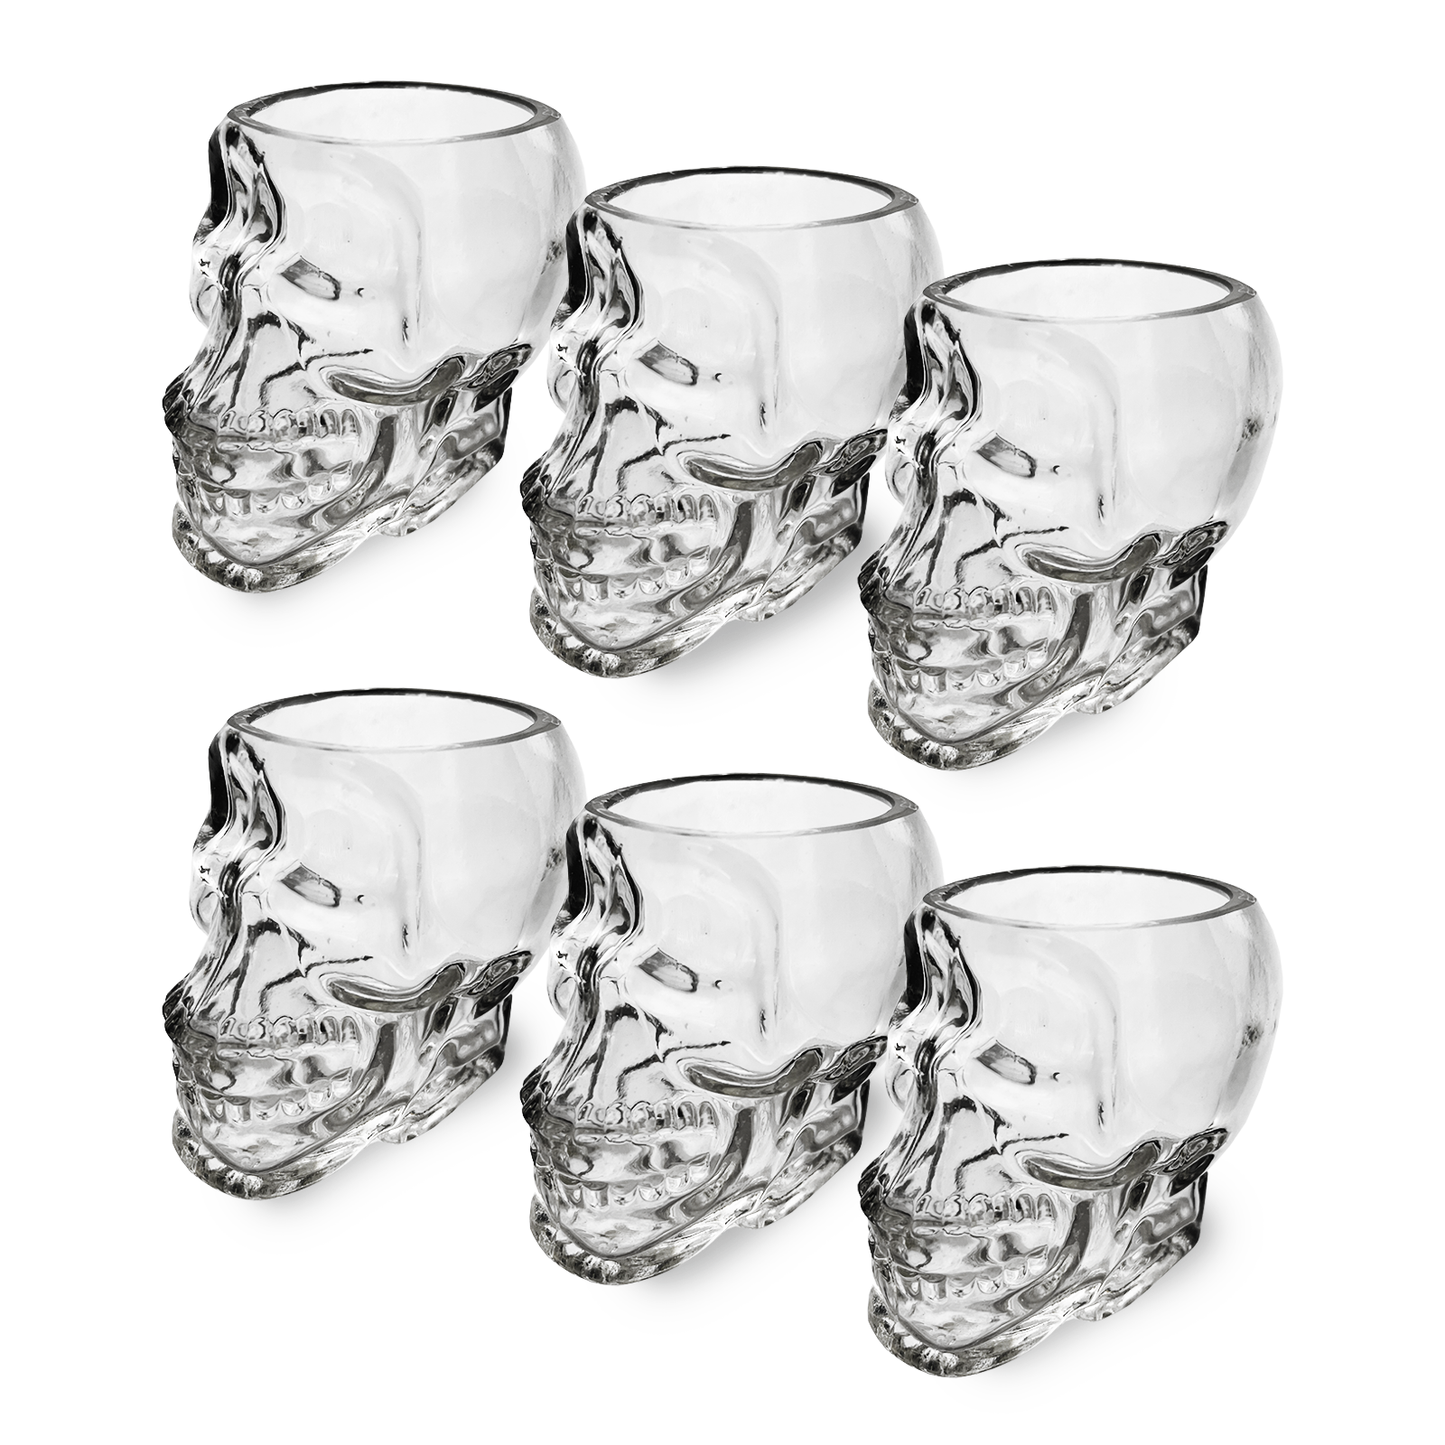 Skull 3 oz Shot Glasses (Set of 6) - by The Wine Savant